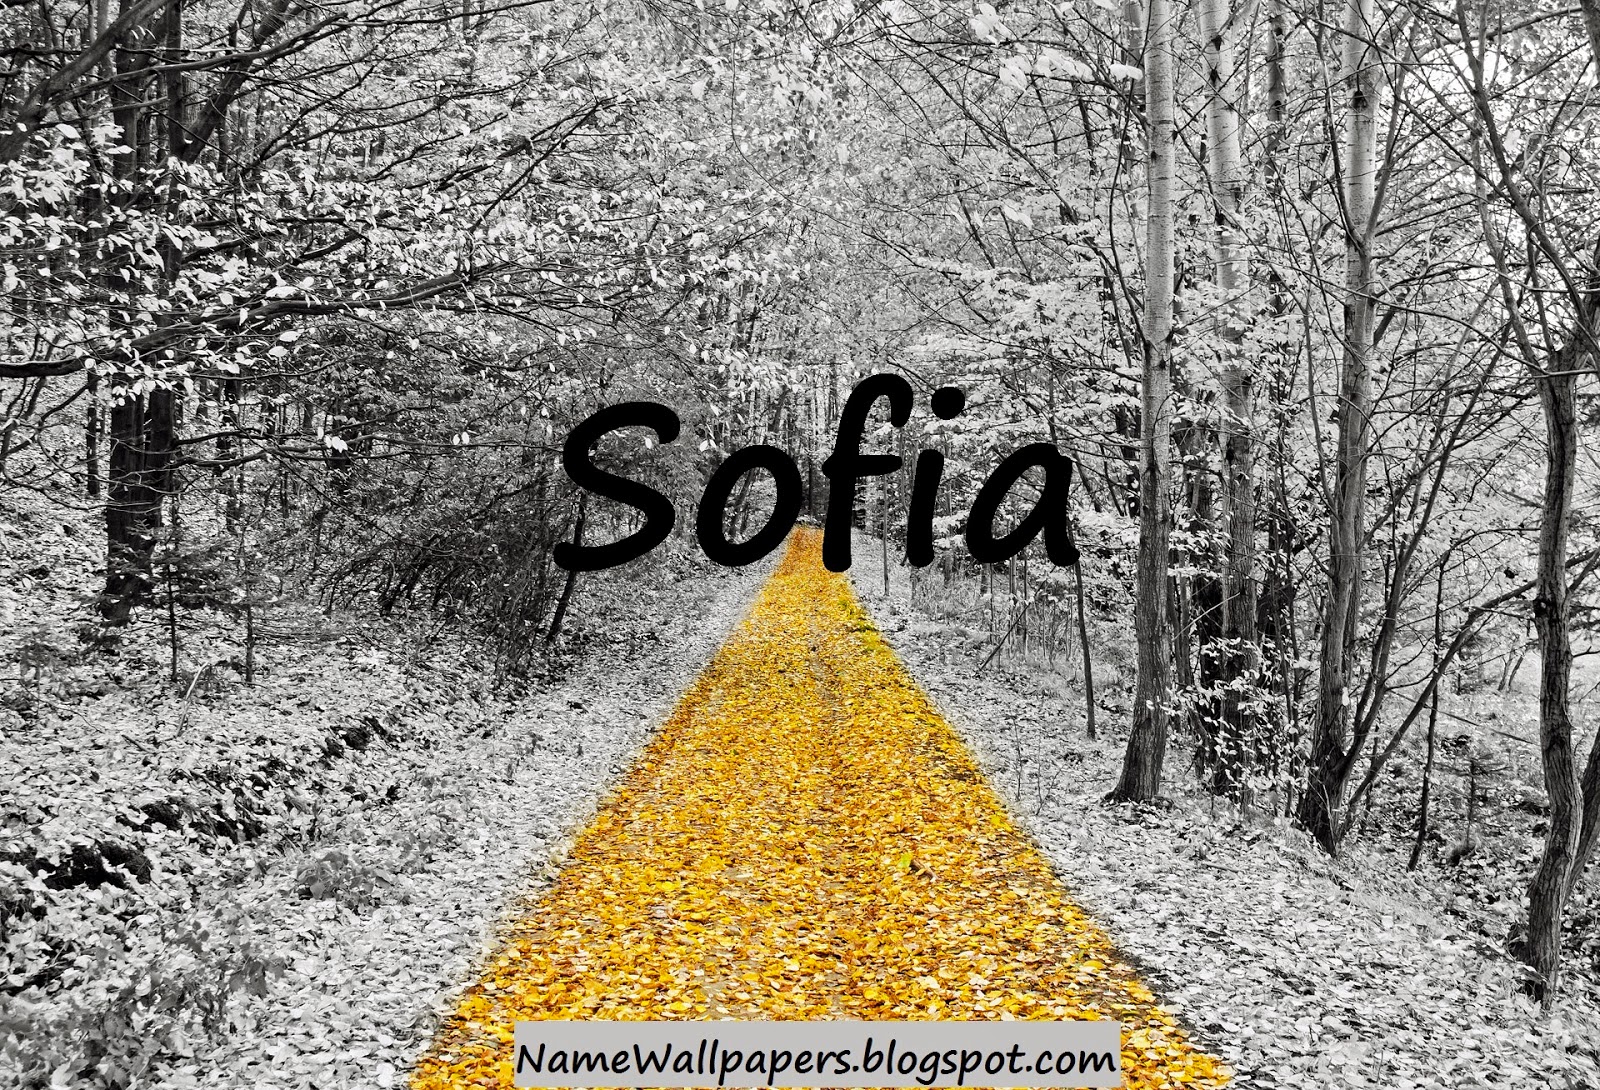 sofia name wallpaper,natural landscape,nature,tree,black and white,yellow